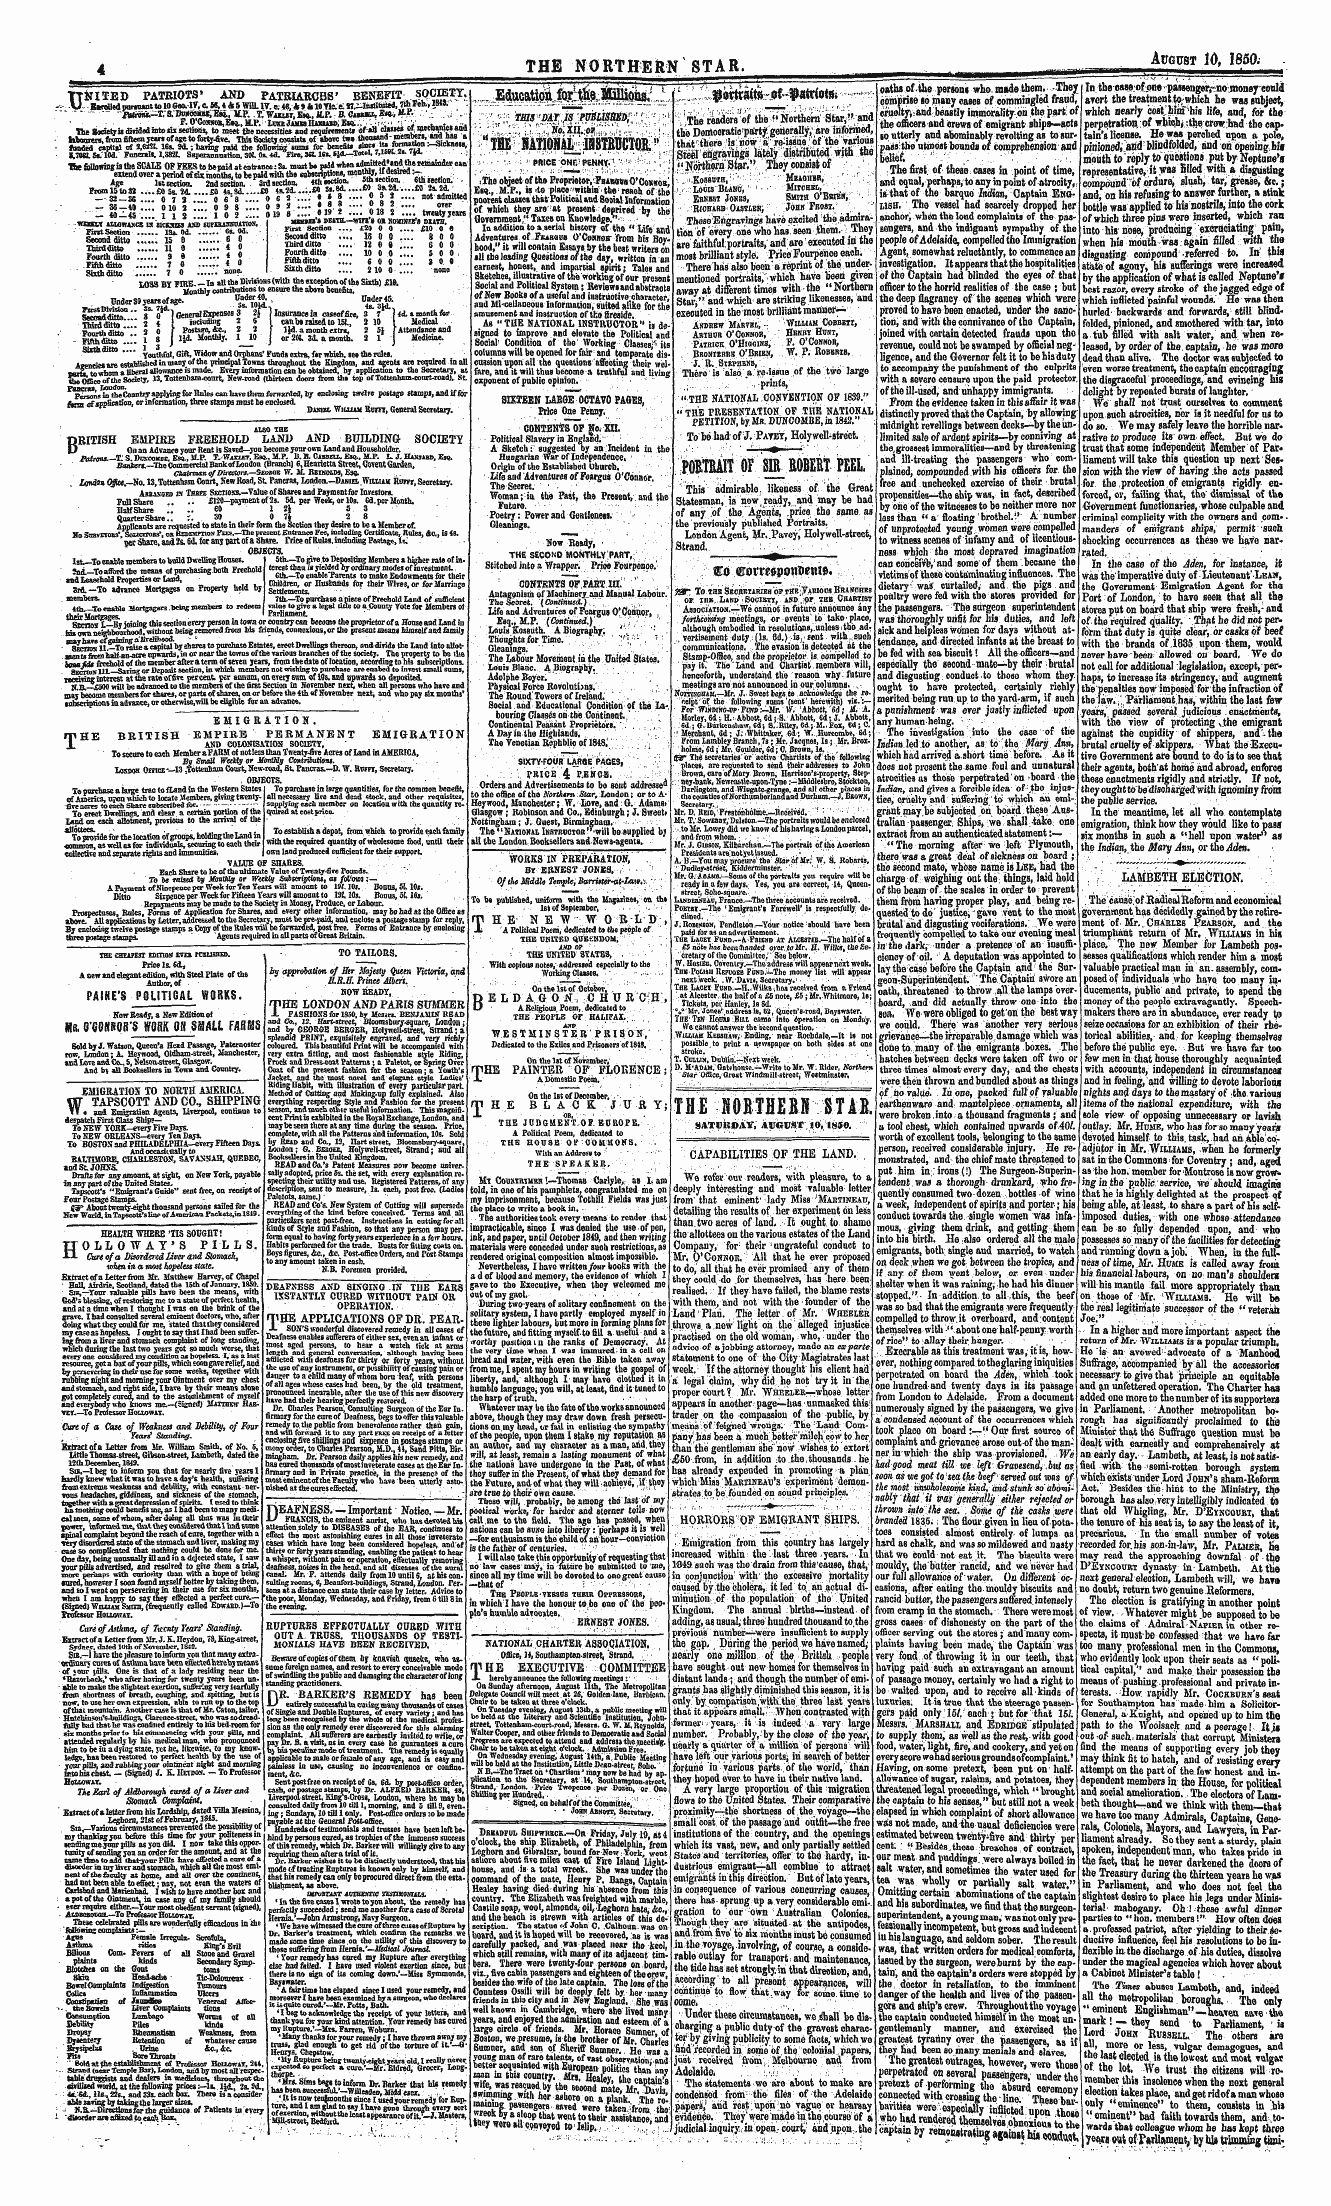 Northern Star (1837-1852): jS F Y, 3rd edition - Ad00419